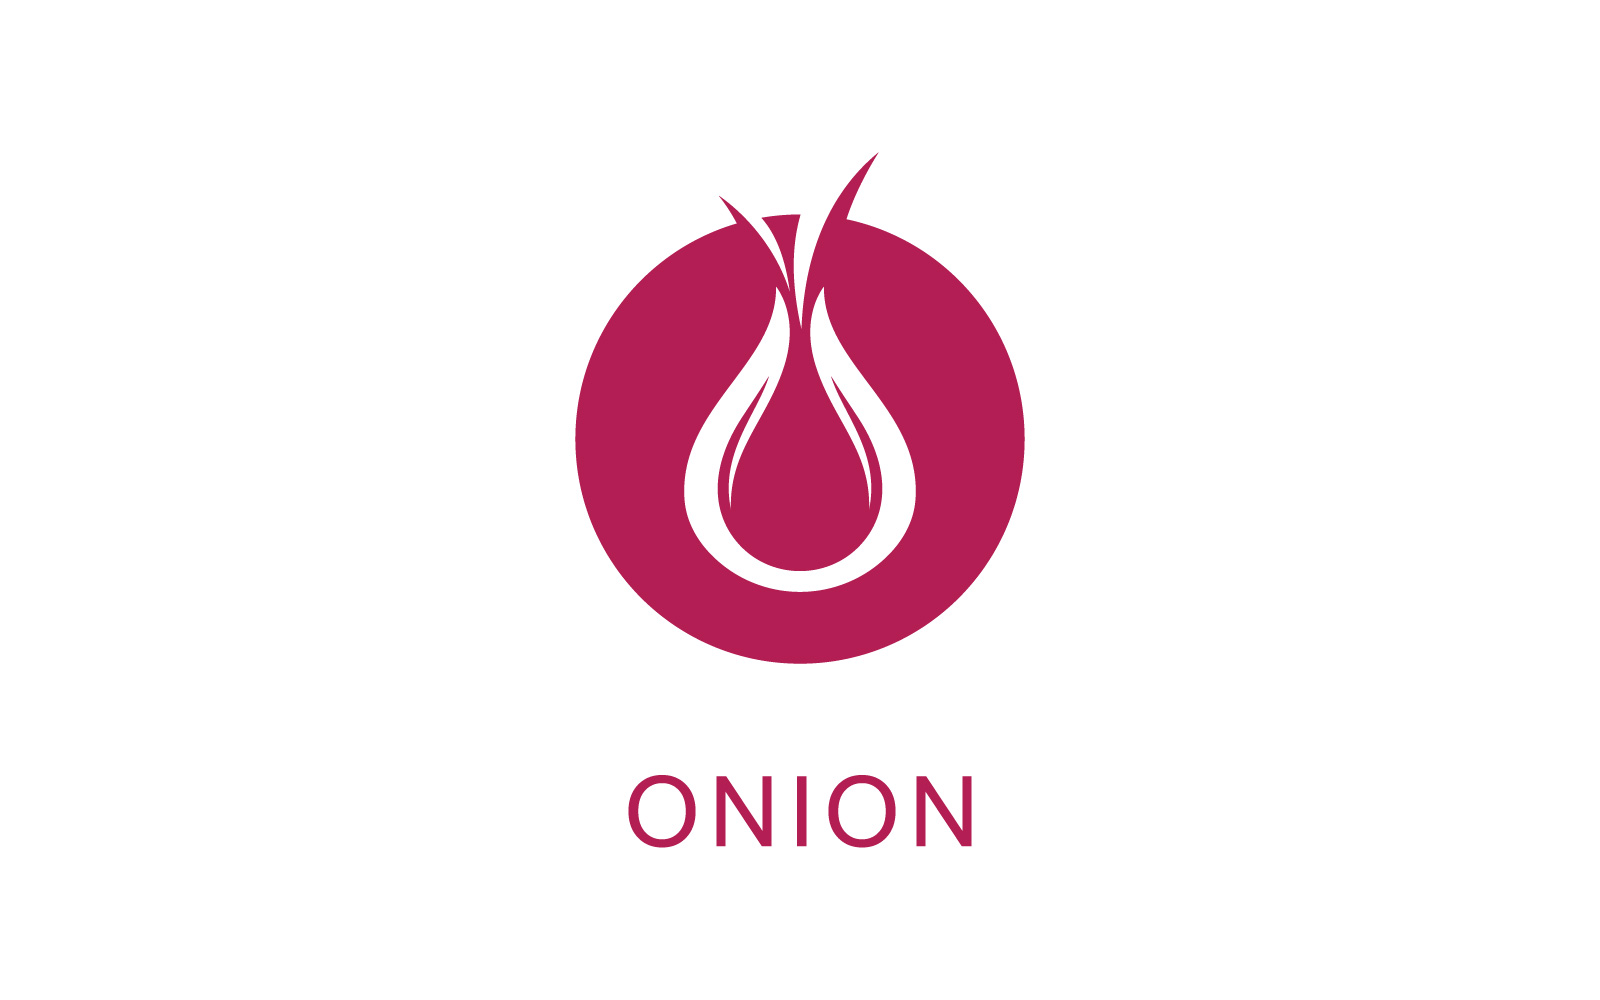 Onion Vector Template. Red Onion Logo Design V12